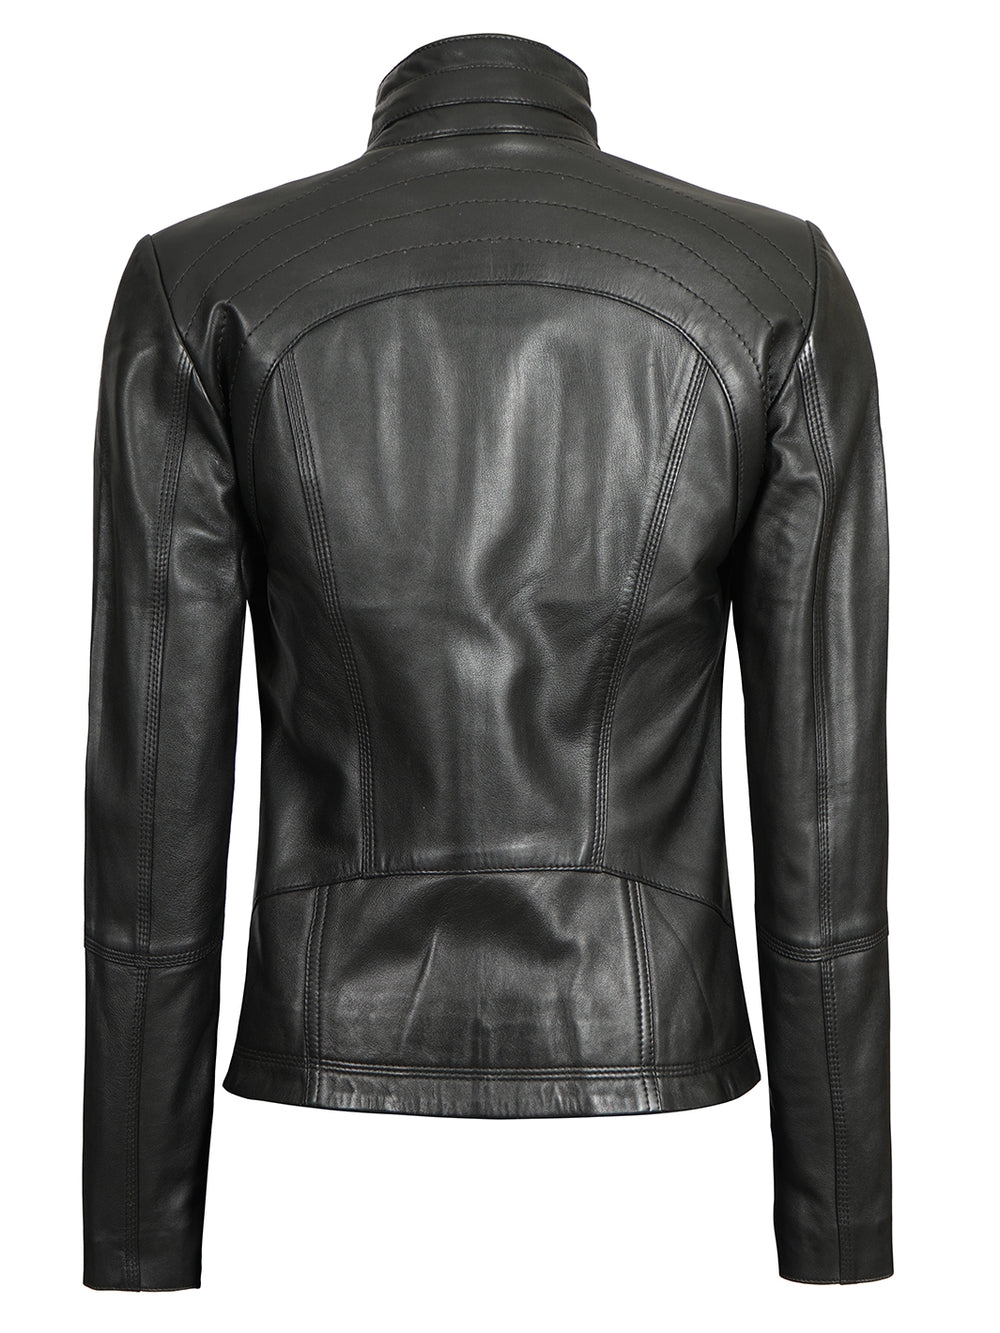 Womens black motorcycle leather jacket